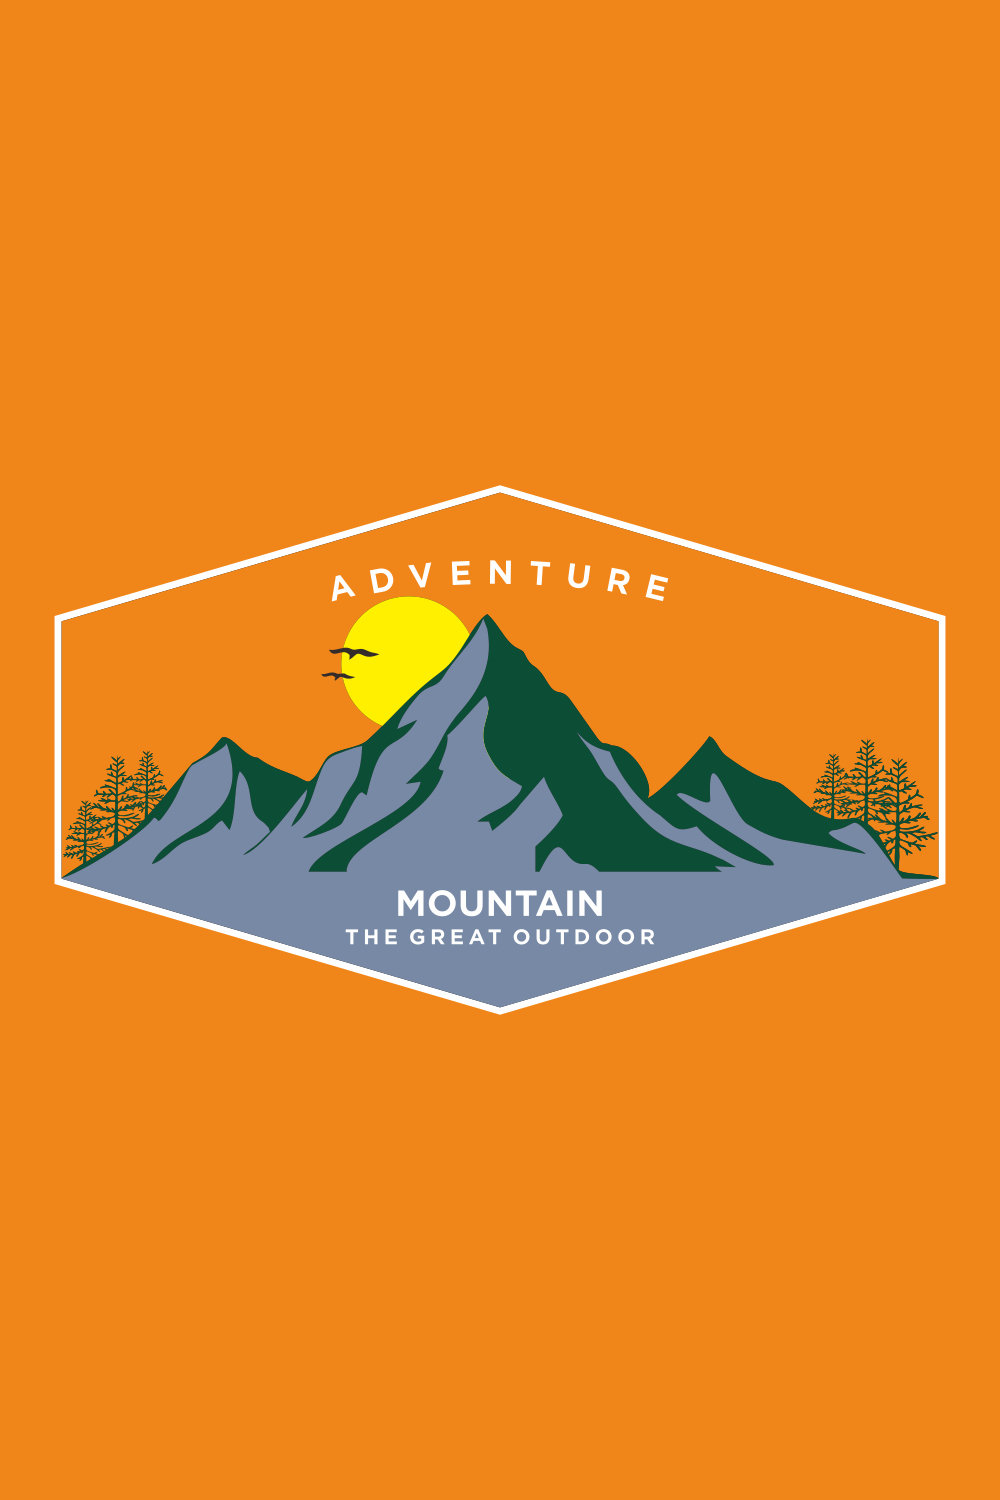 Mountain logo outdoor emblem circle adventure wildlife pine tree forest design, hiking exploration nature pinterest preview image.